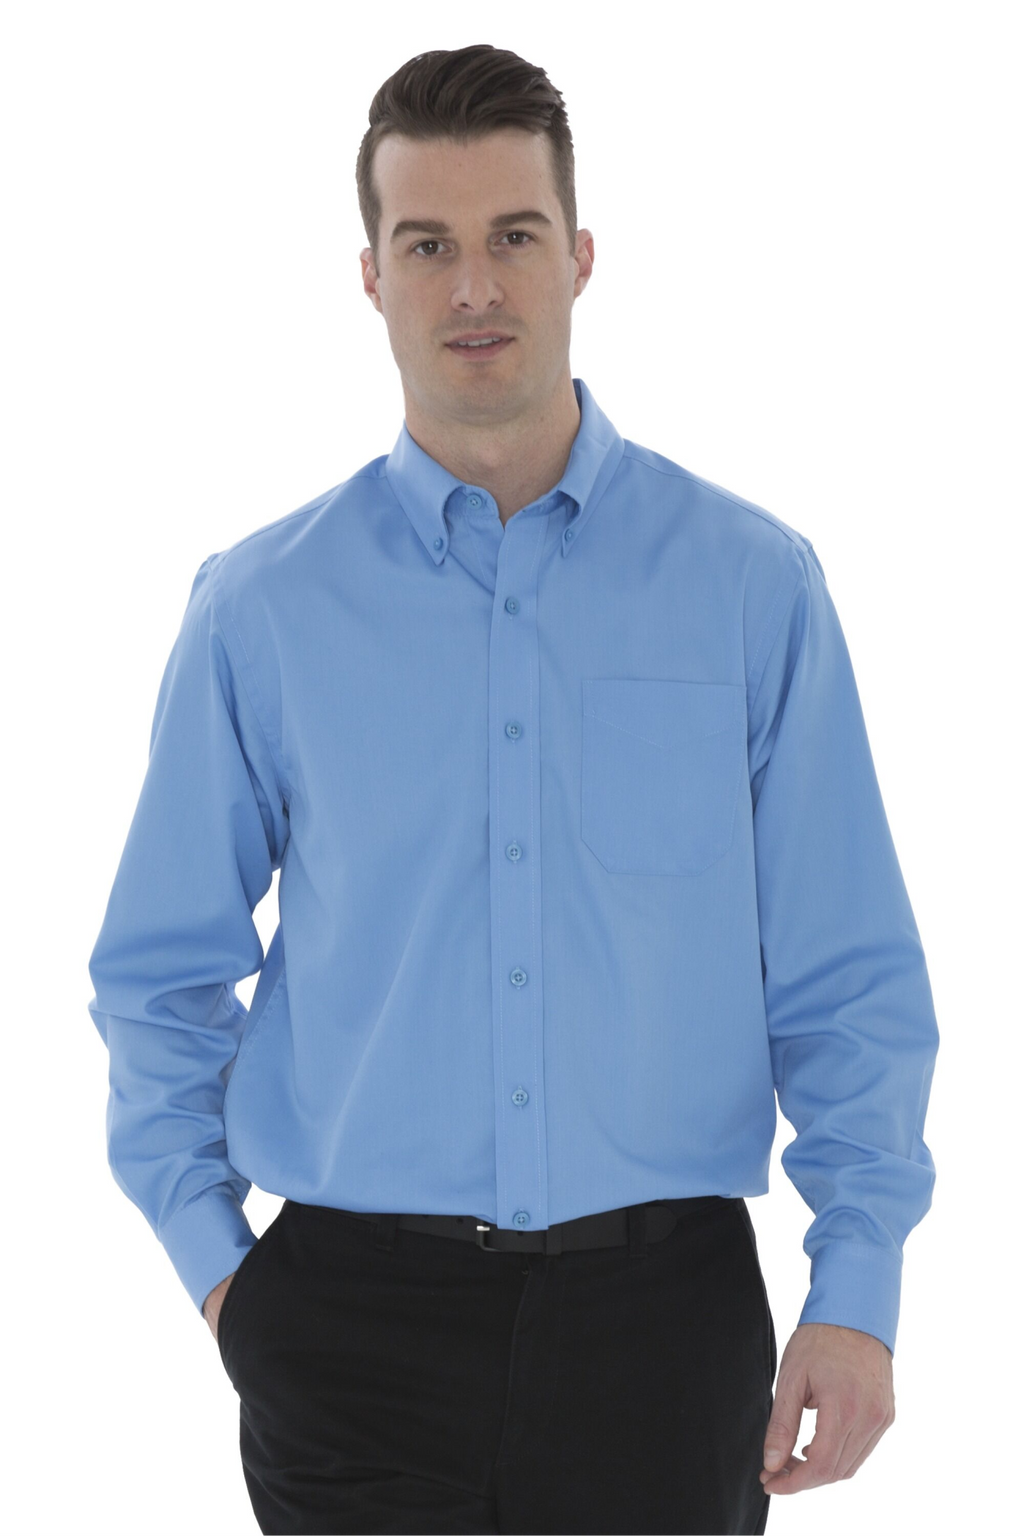 Model Adult Dress Shirt - Long Sleeve - D6013